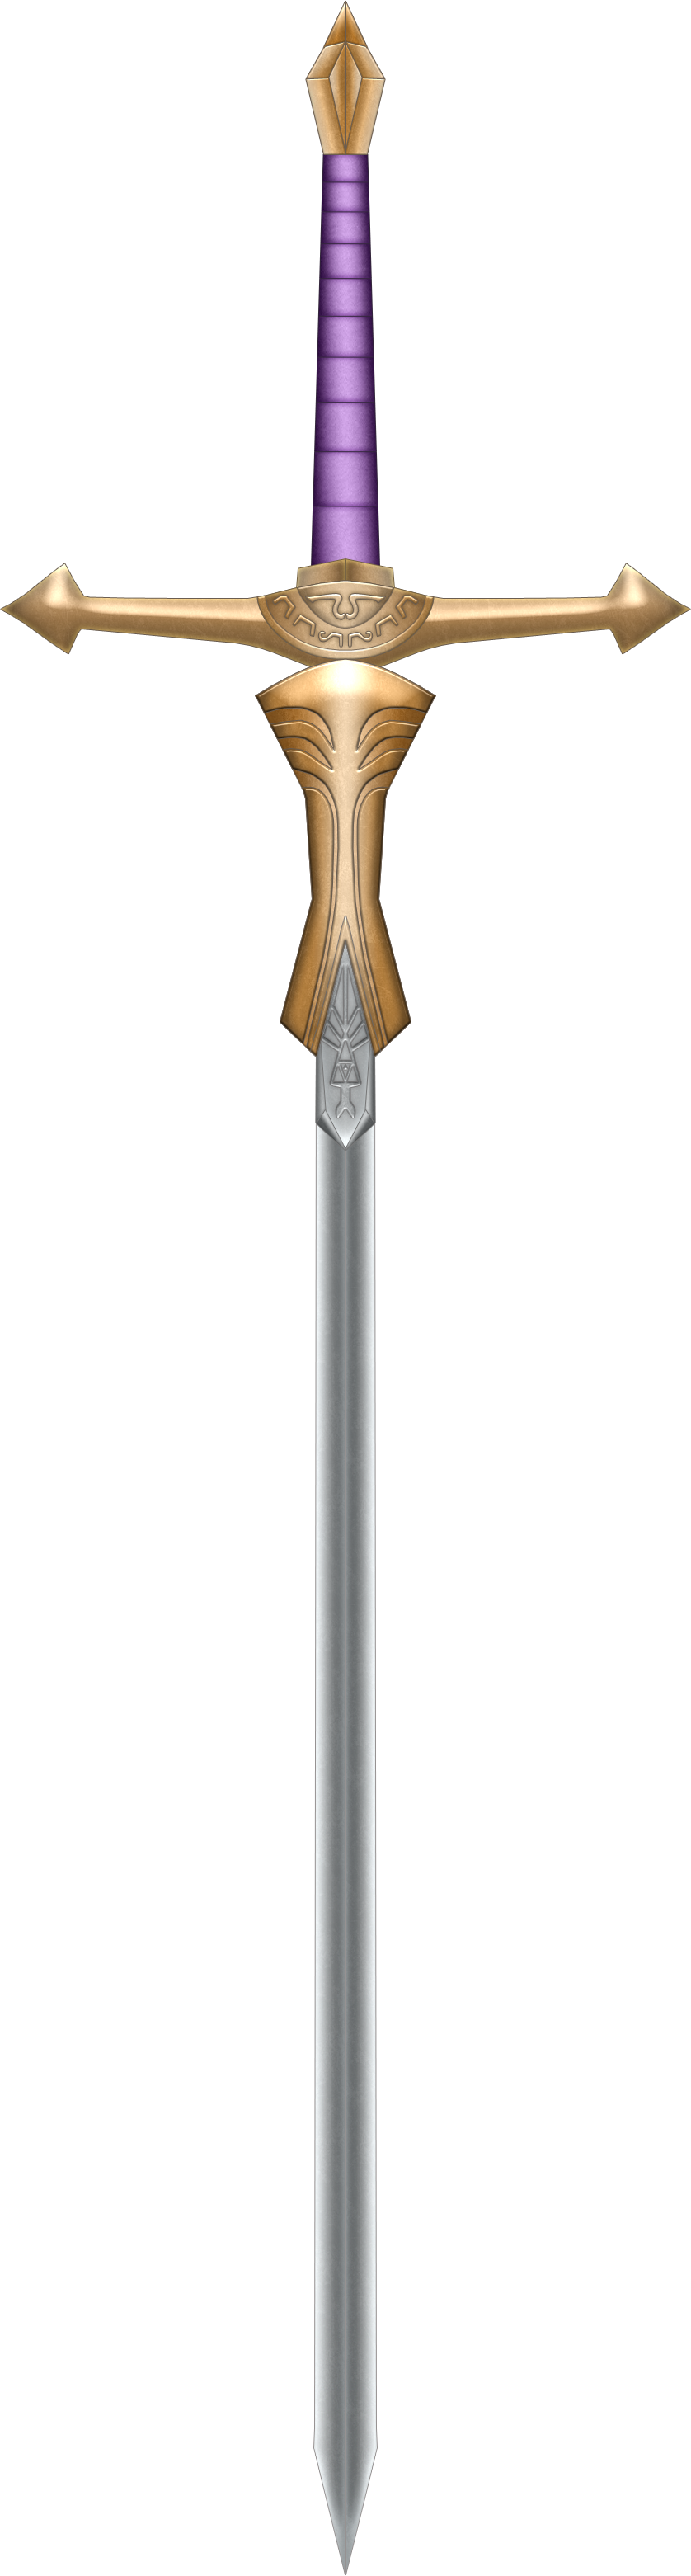 Tp Royal Sword By Blueamnesiac Tp Royal Sword By Blueamnesiac - Melee Weapon (838x3123)